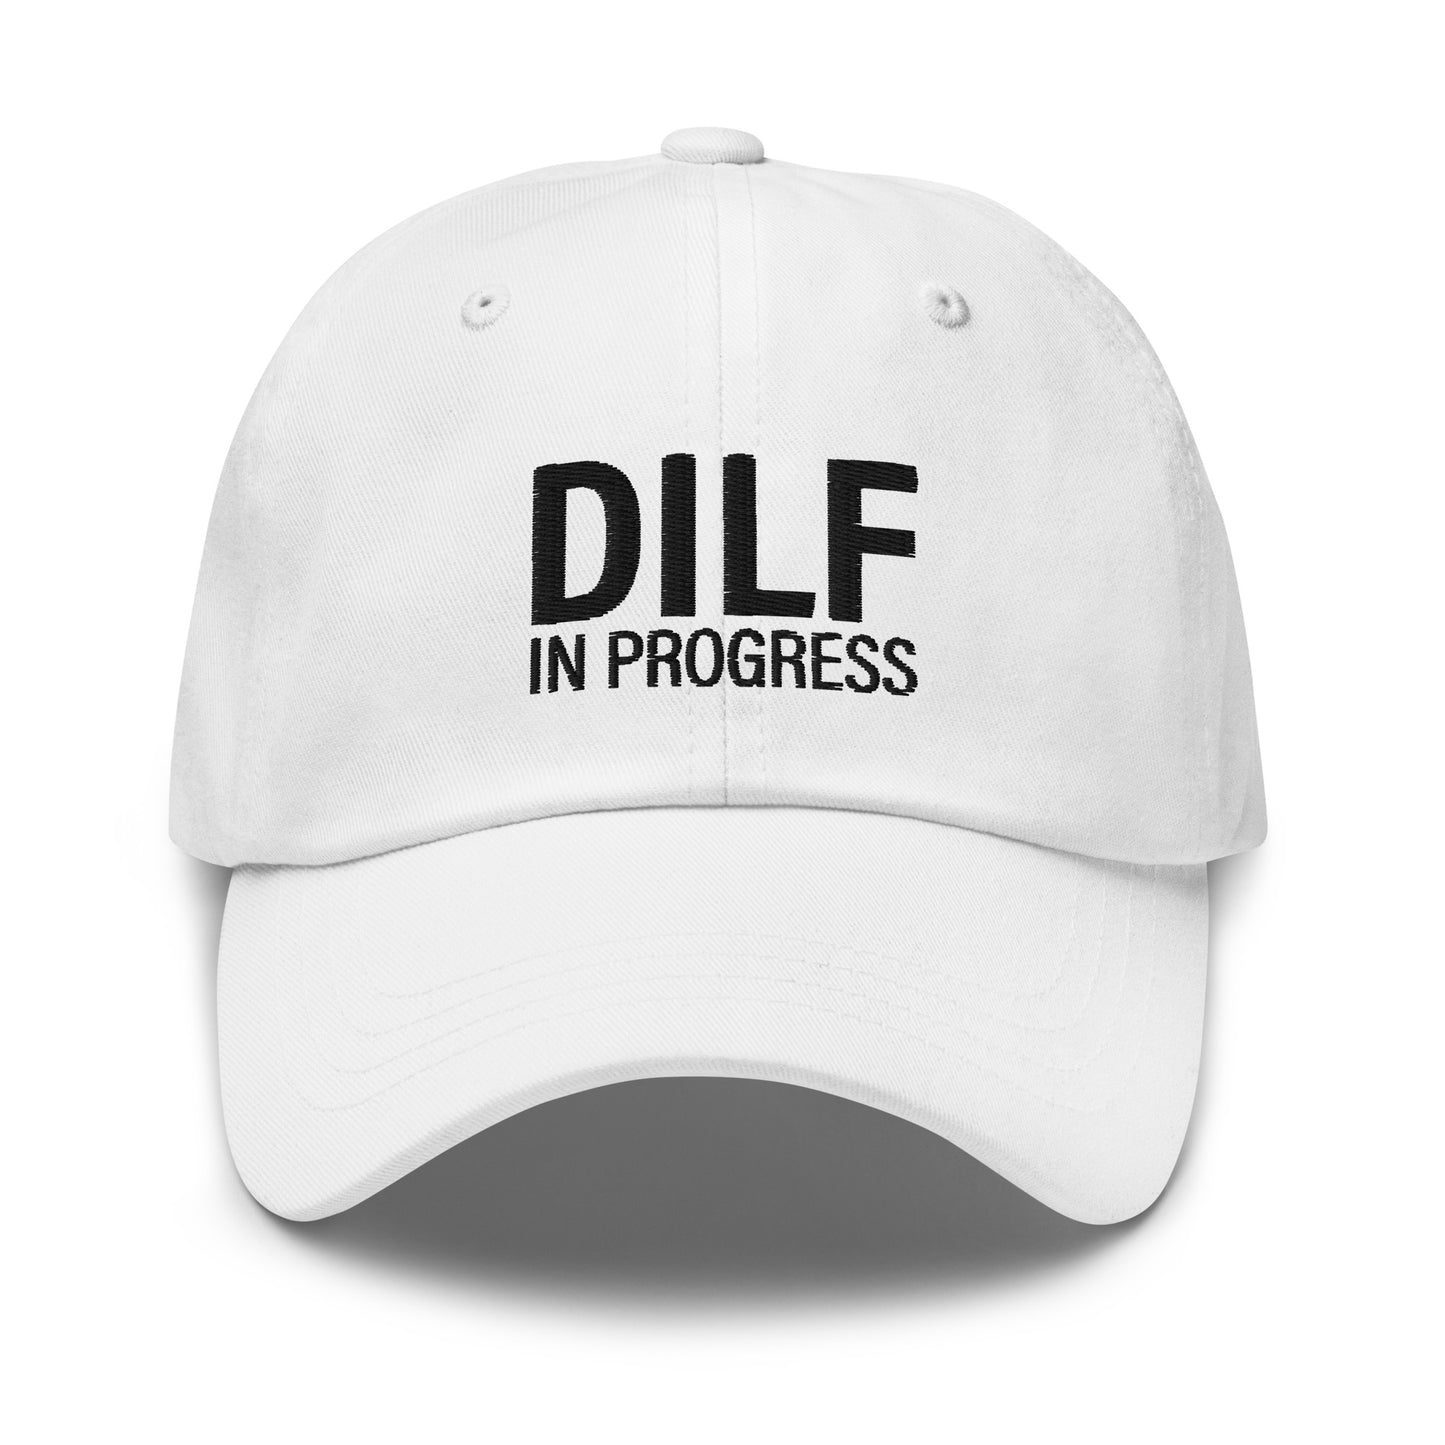 DILF in Progress hat